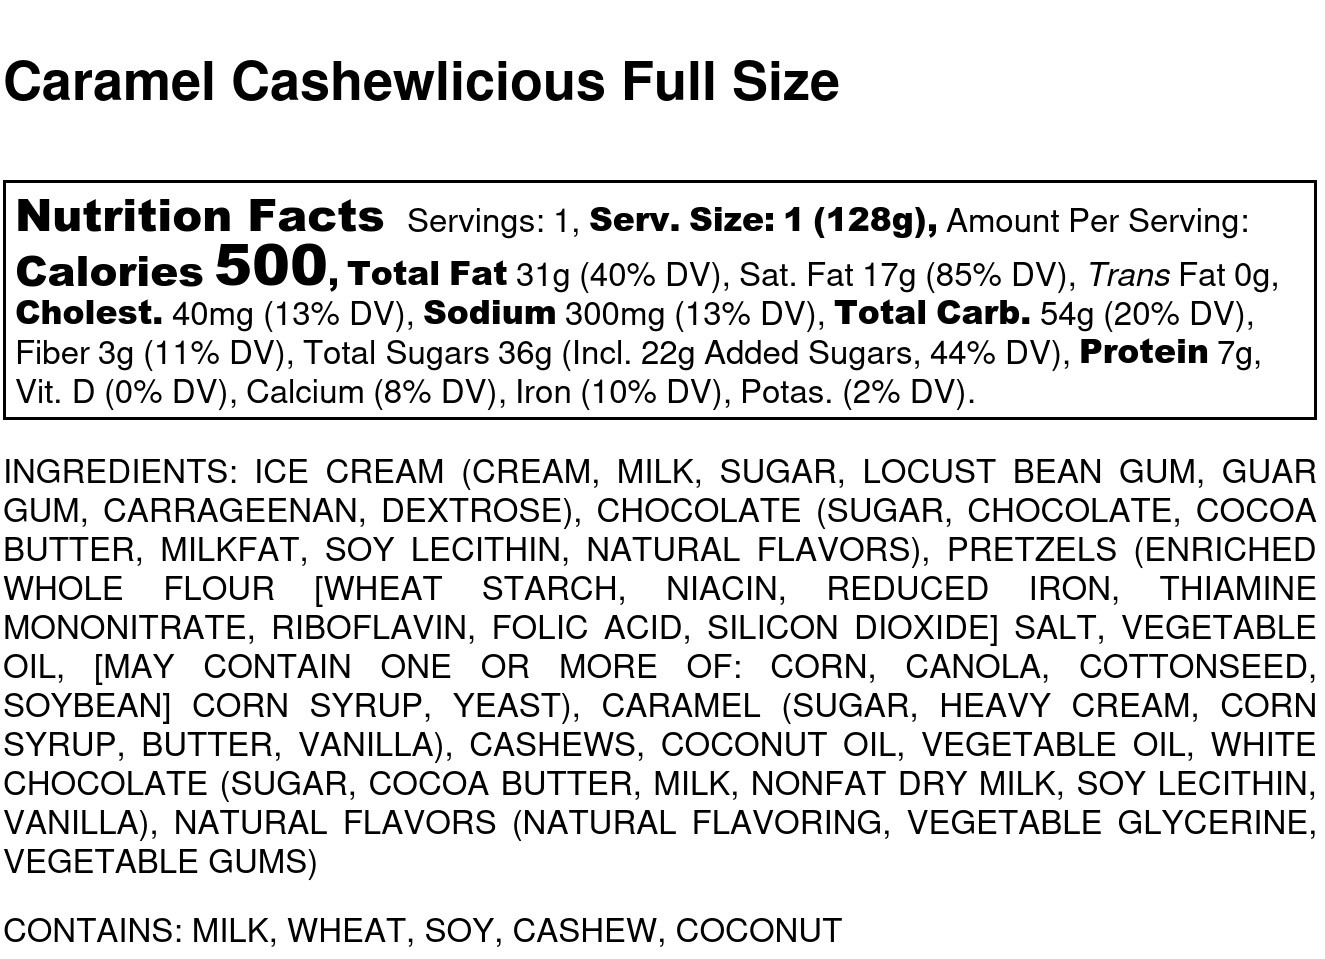 Caramel Cashewlicious Full Size Nutrition Label